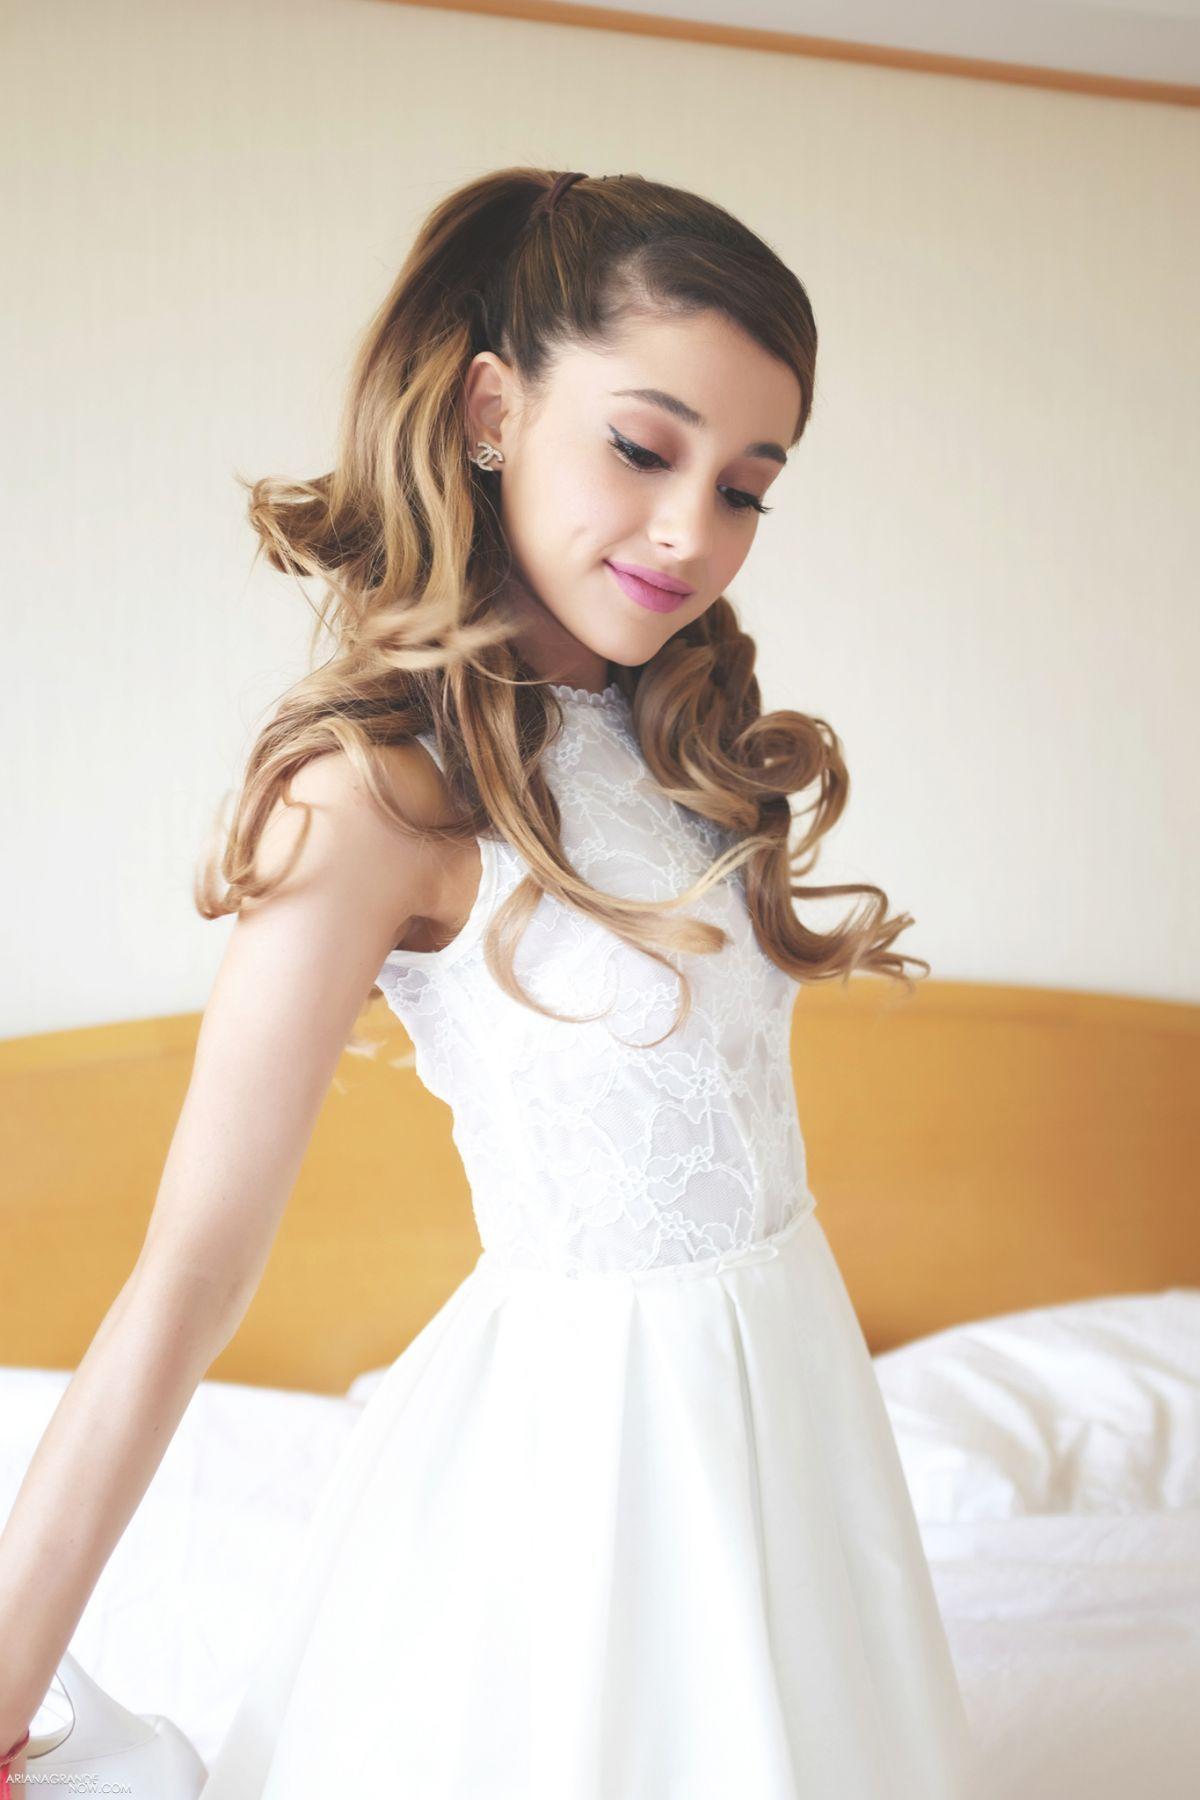 Ariana Grande Unkown Photoshoot 2014. Ariana Grande